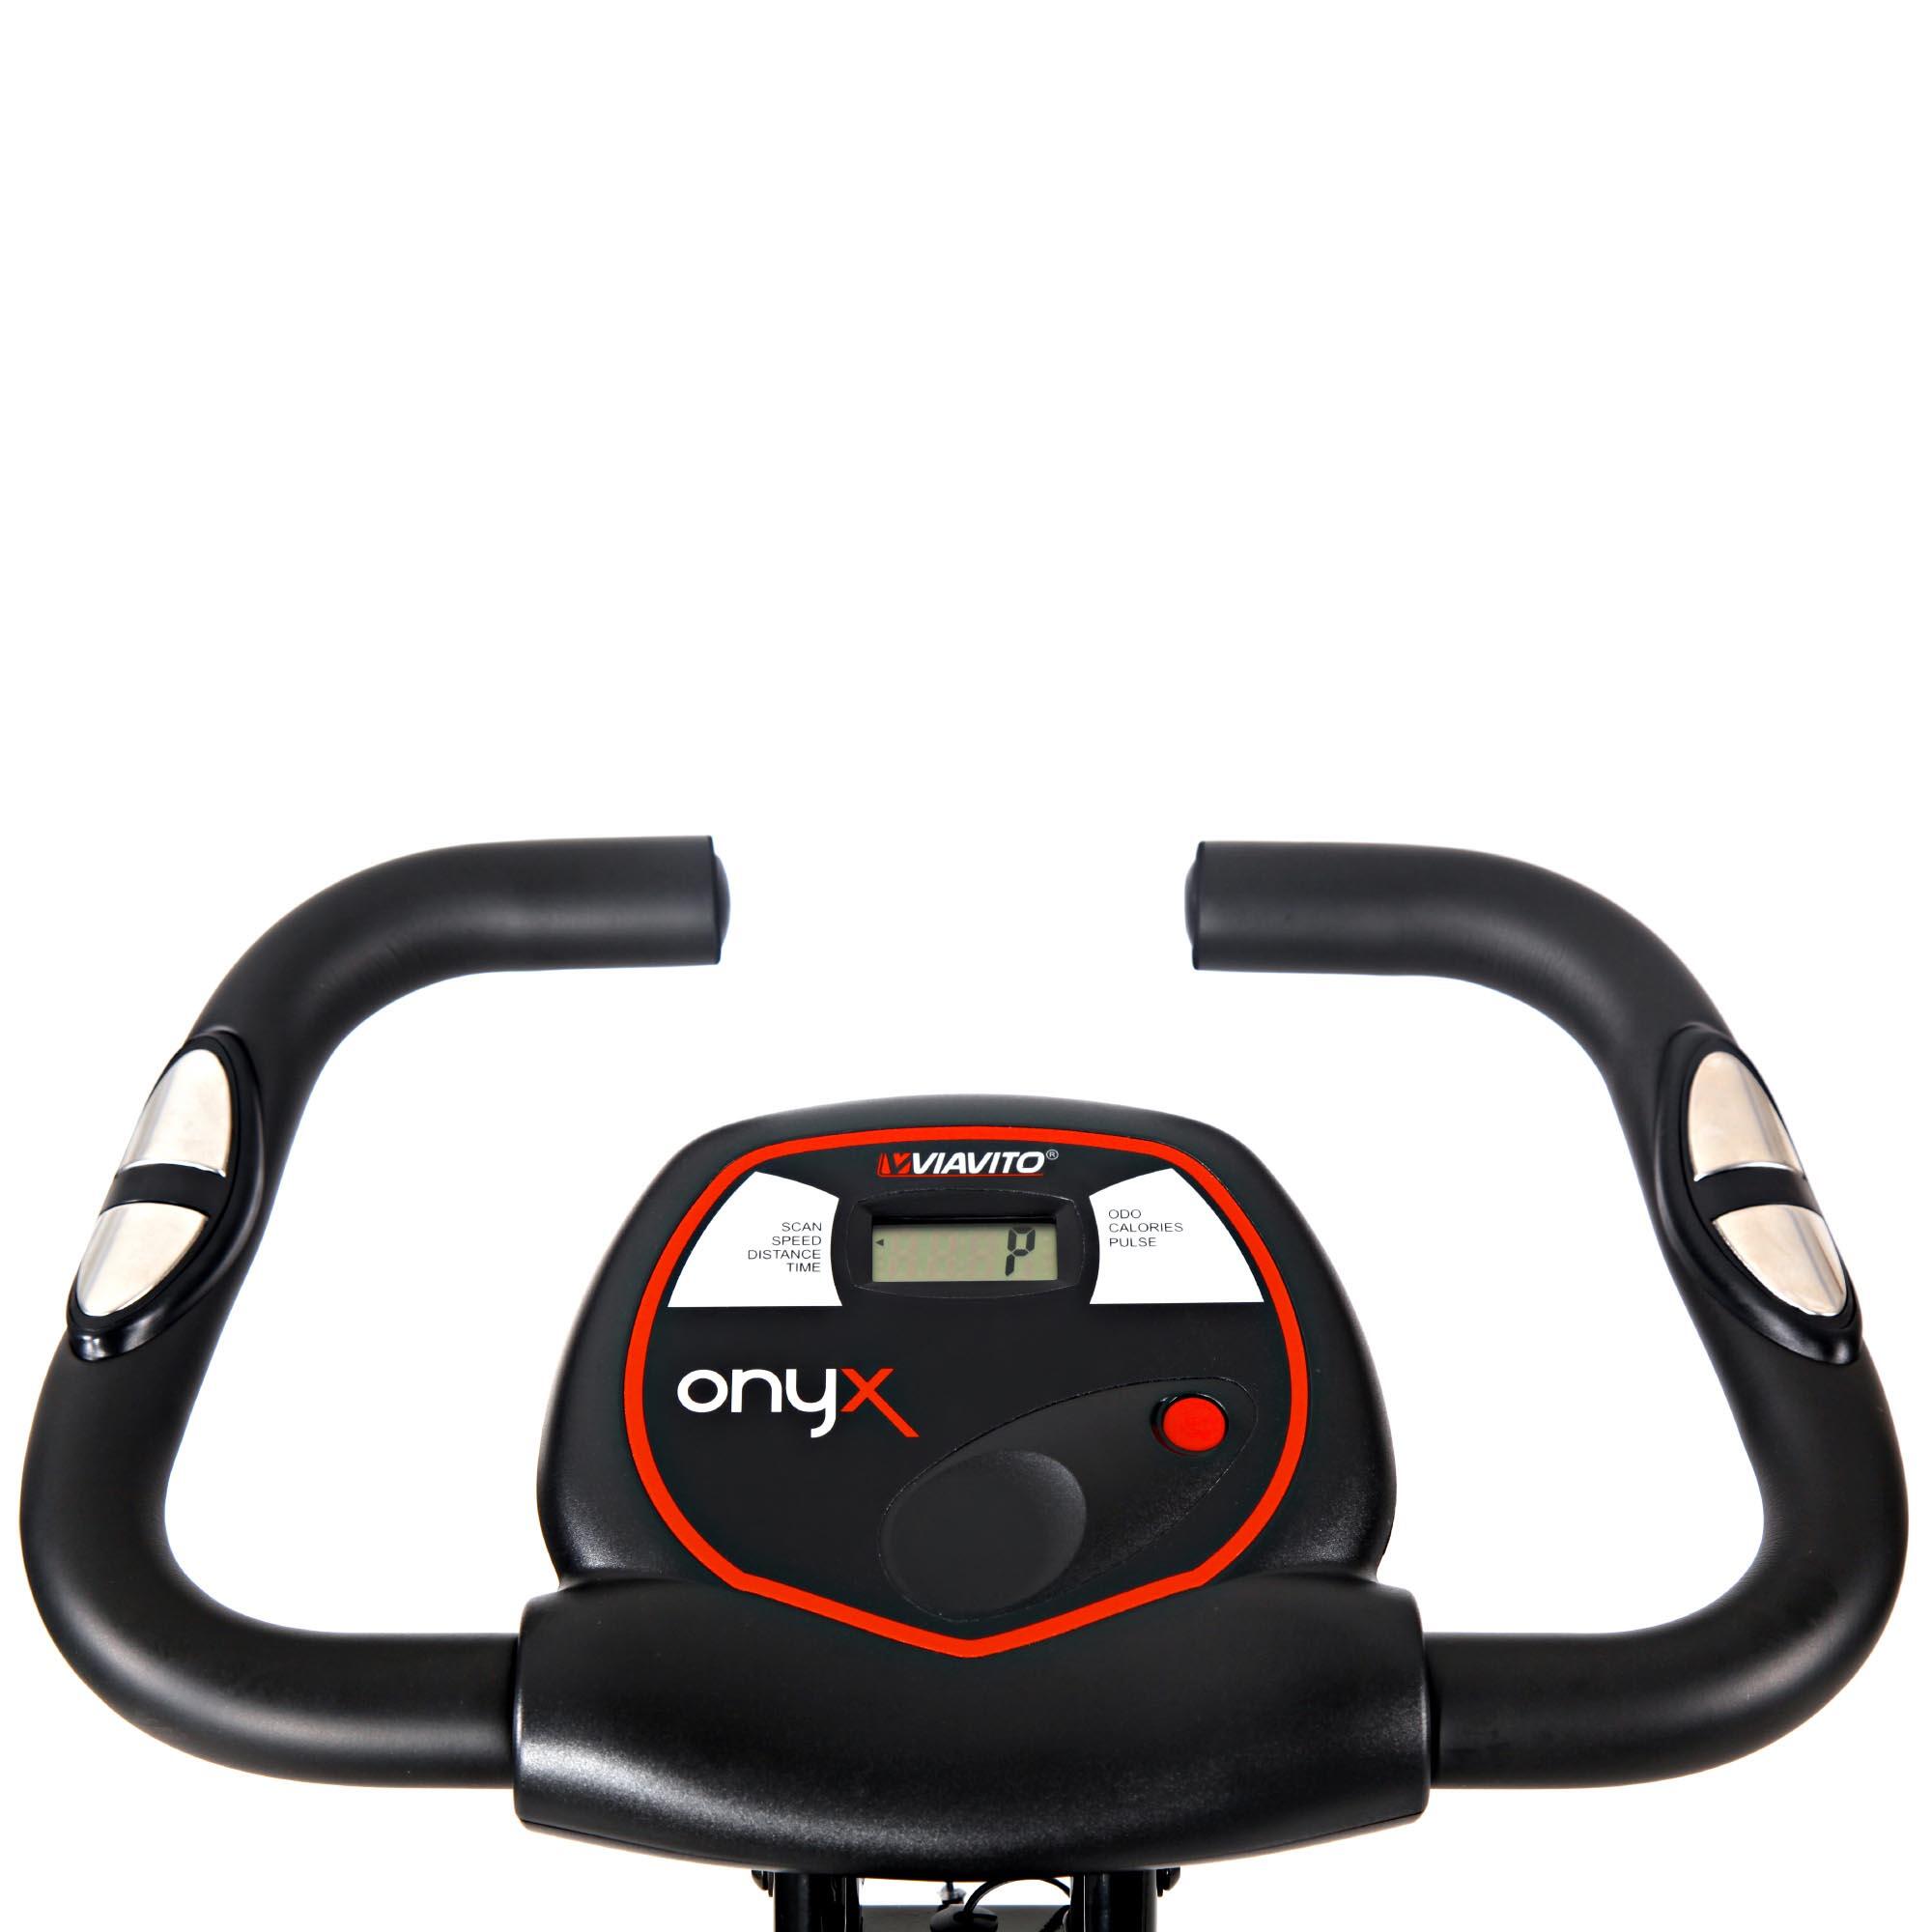 Viavito Onyx Folding Exercise Bike 2/5